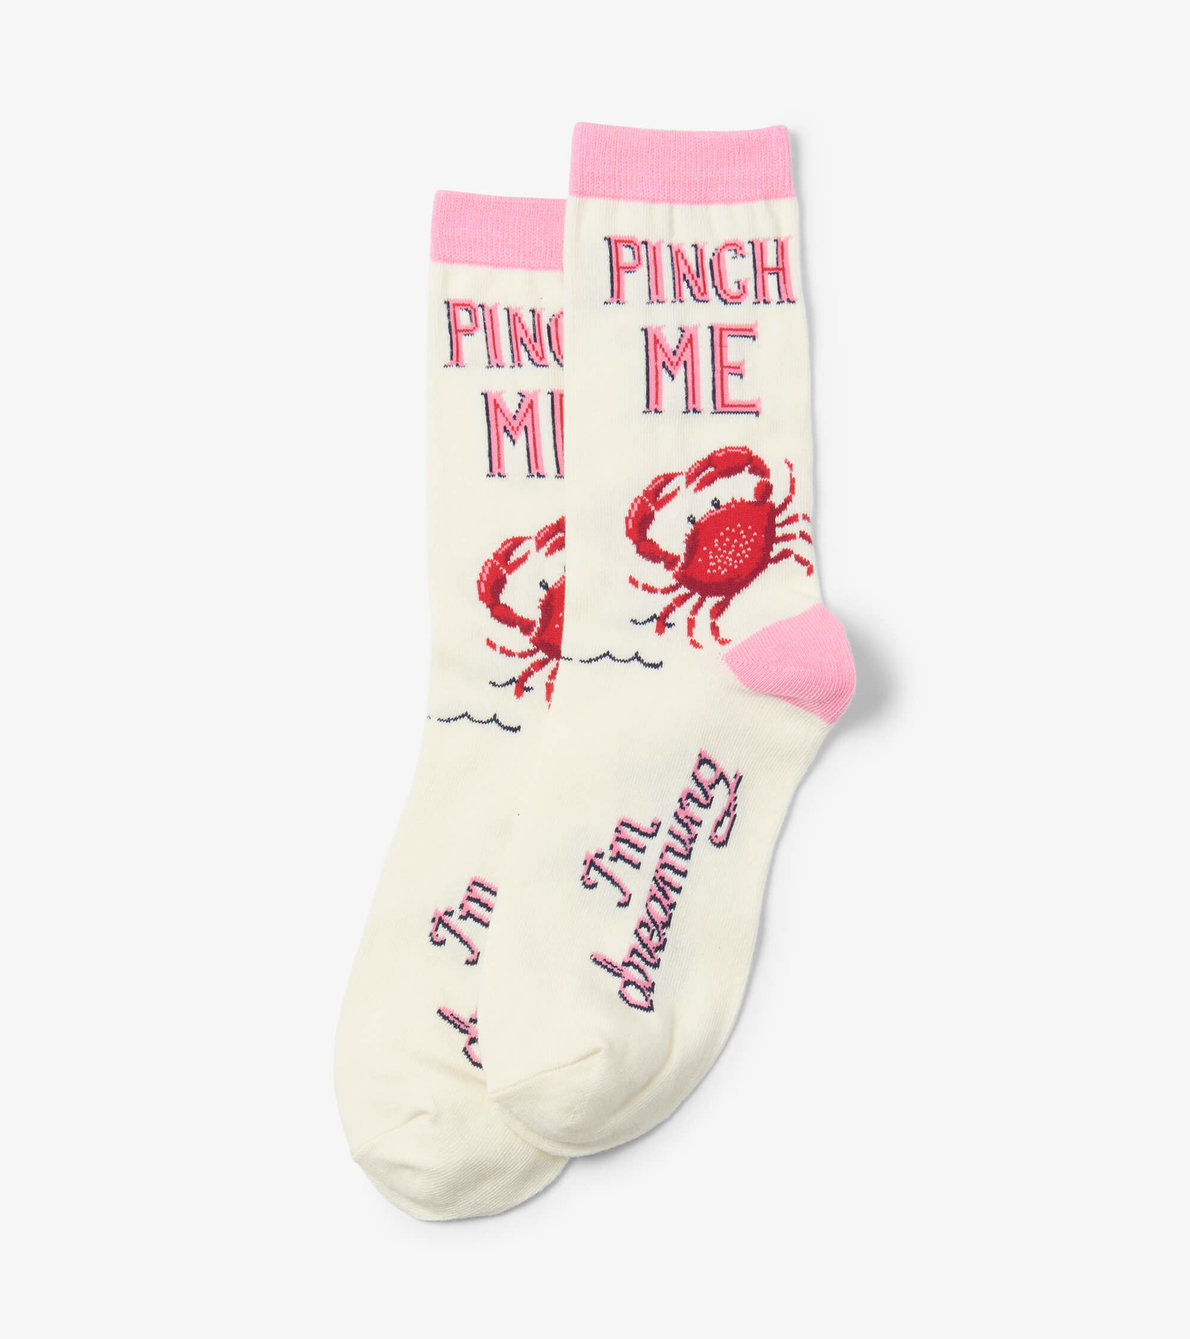 View larger image of Pinch Me Women's Crew Socks